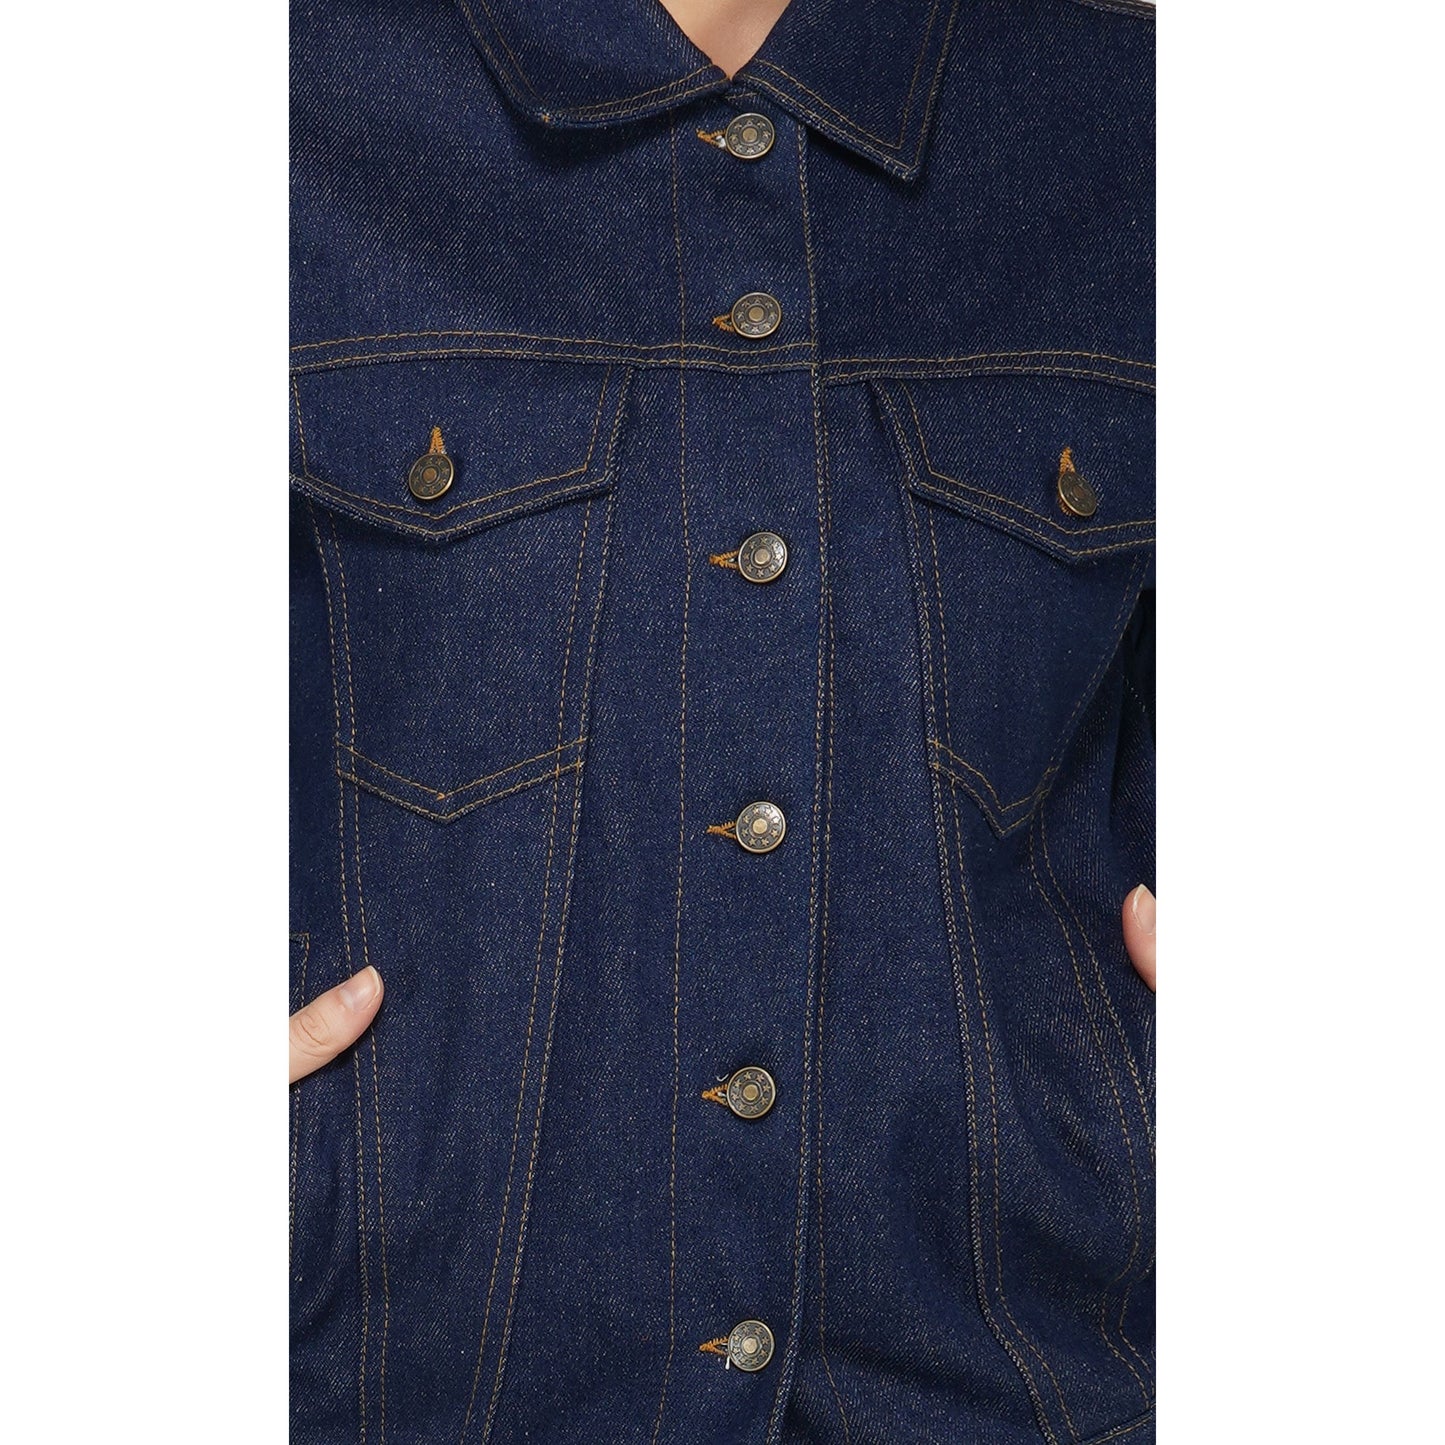 SLAY. Women's Navy Blue Button-Down Denim Jacket-clothing-to-slay.myshopify.com-Denim Jacket